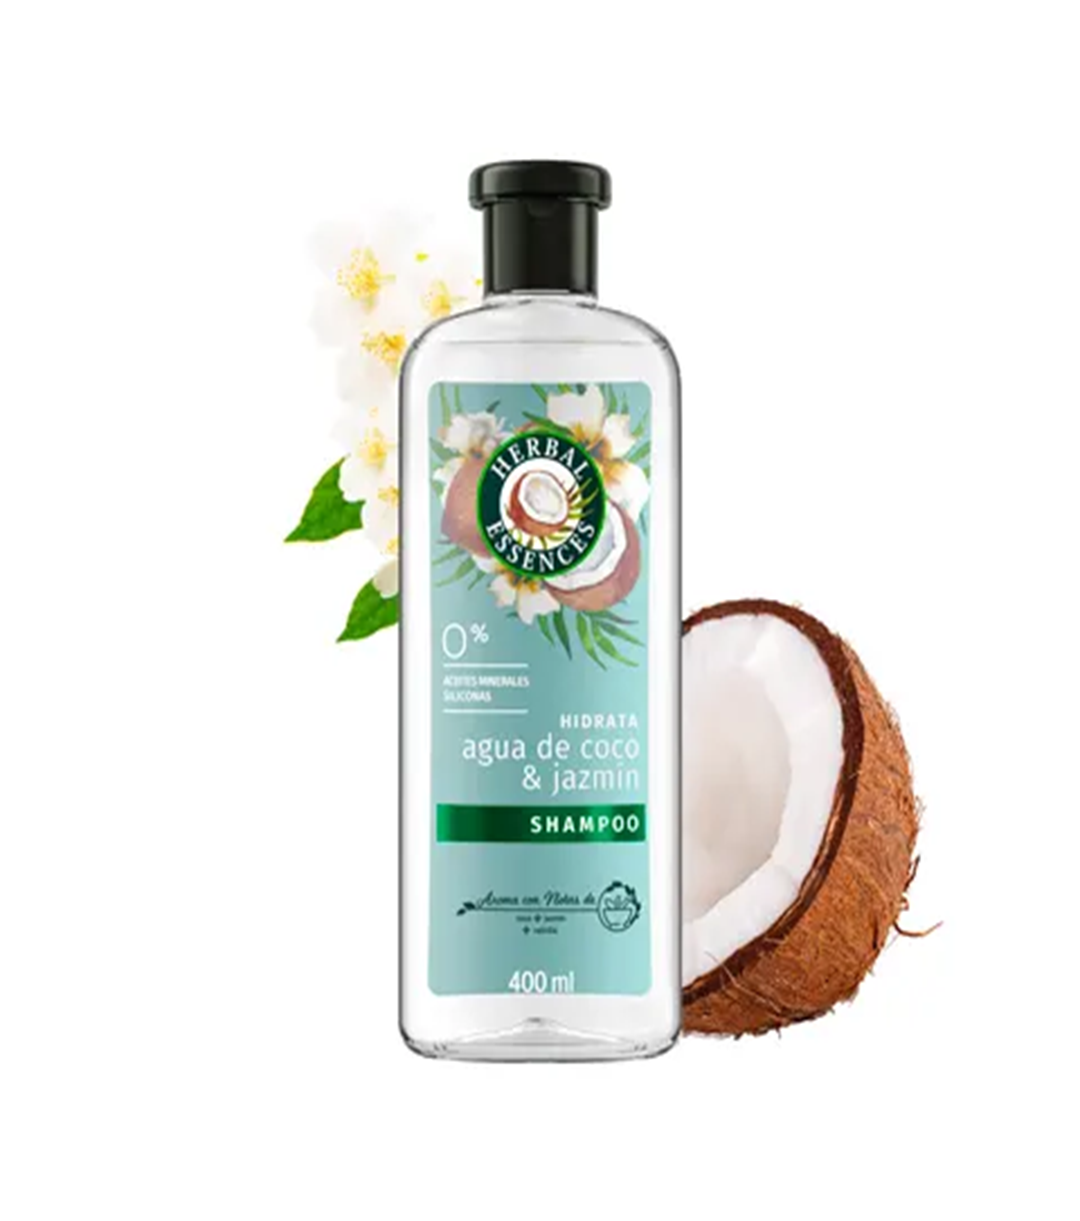 Shampoo Herbal Essences Hidrata Agua de Coco 400ml